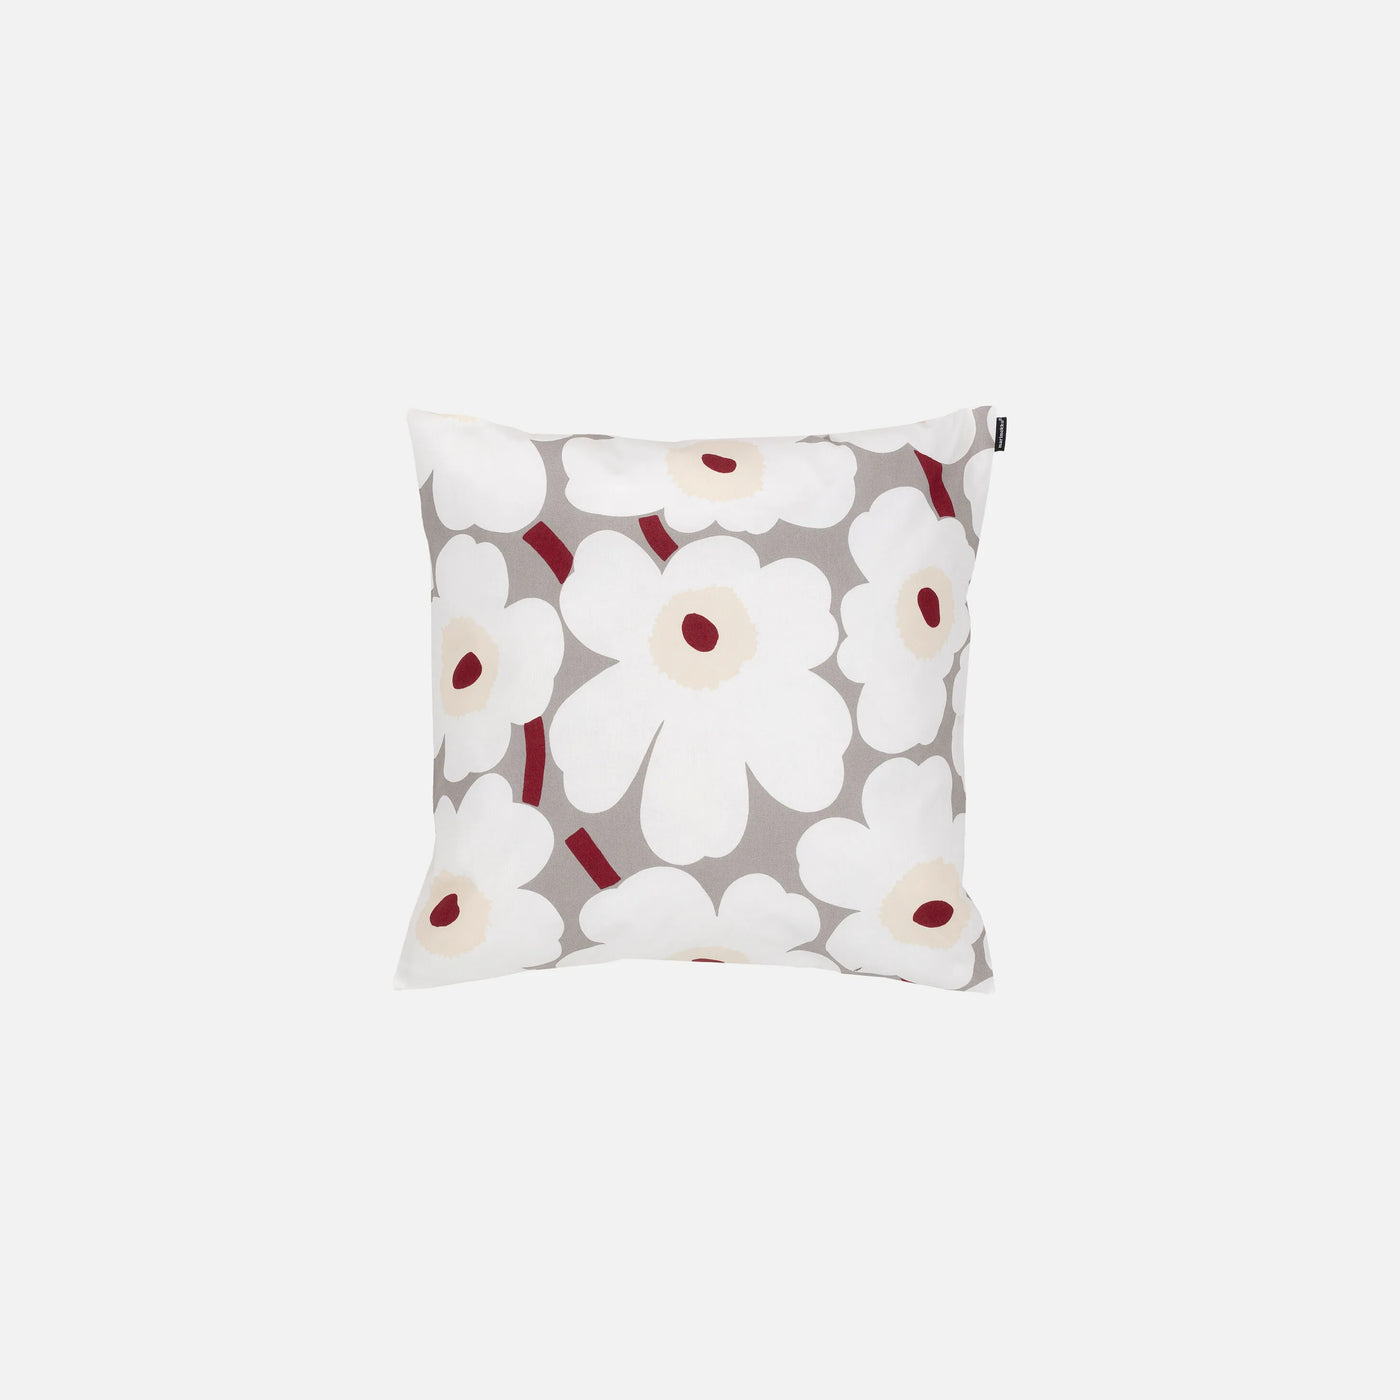 Pieni Unikko Cushion Cover 50 X 50 Cm - grey, red